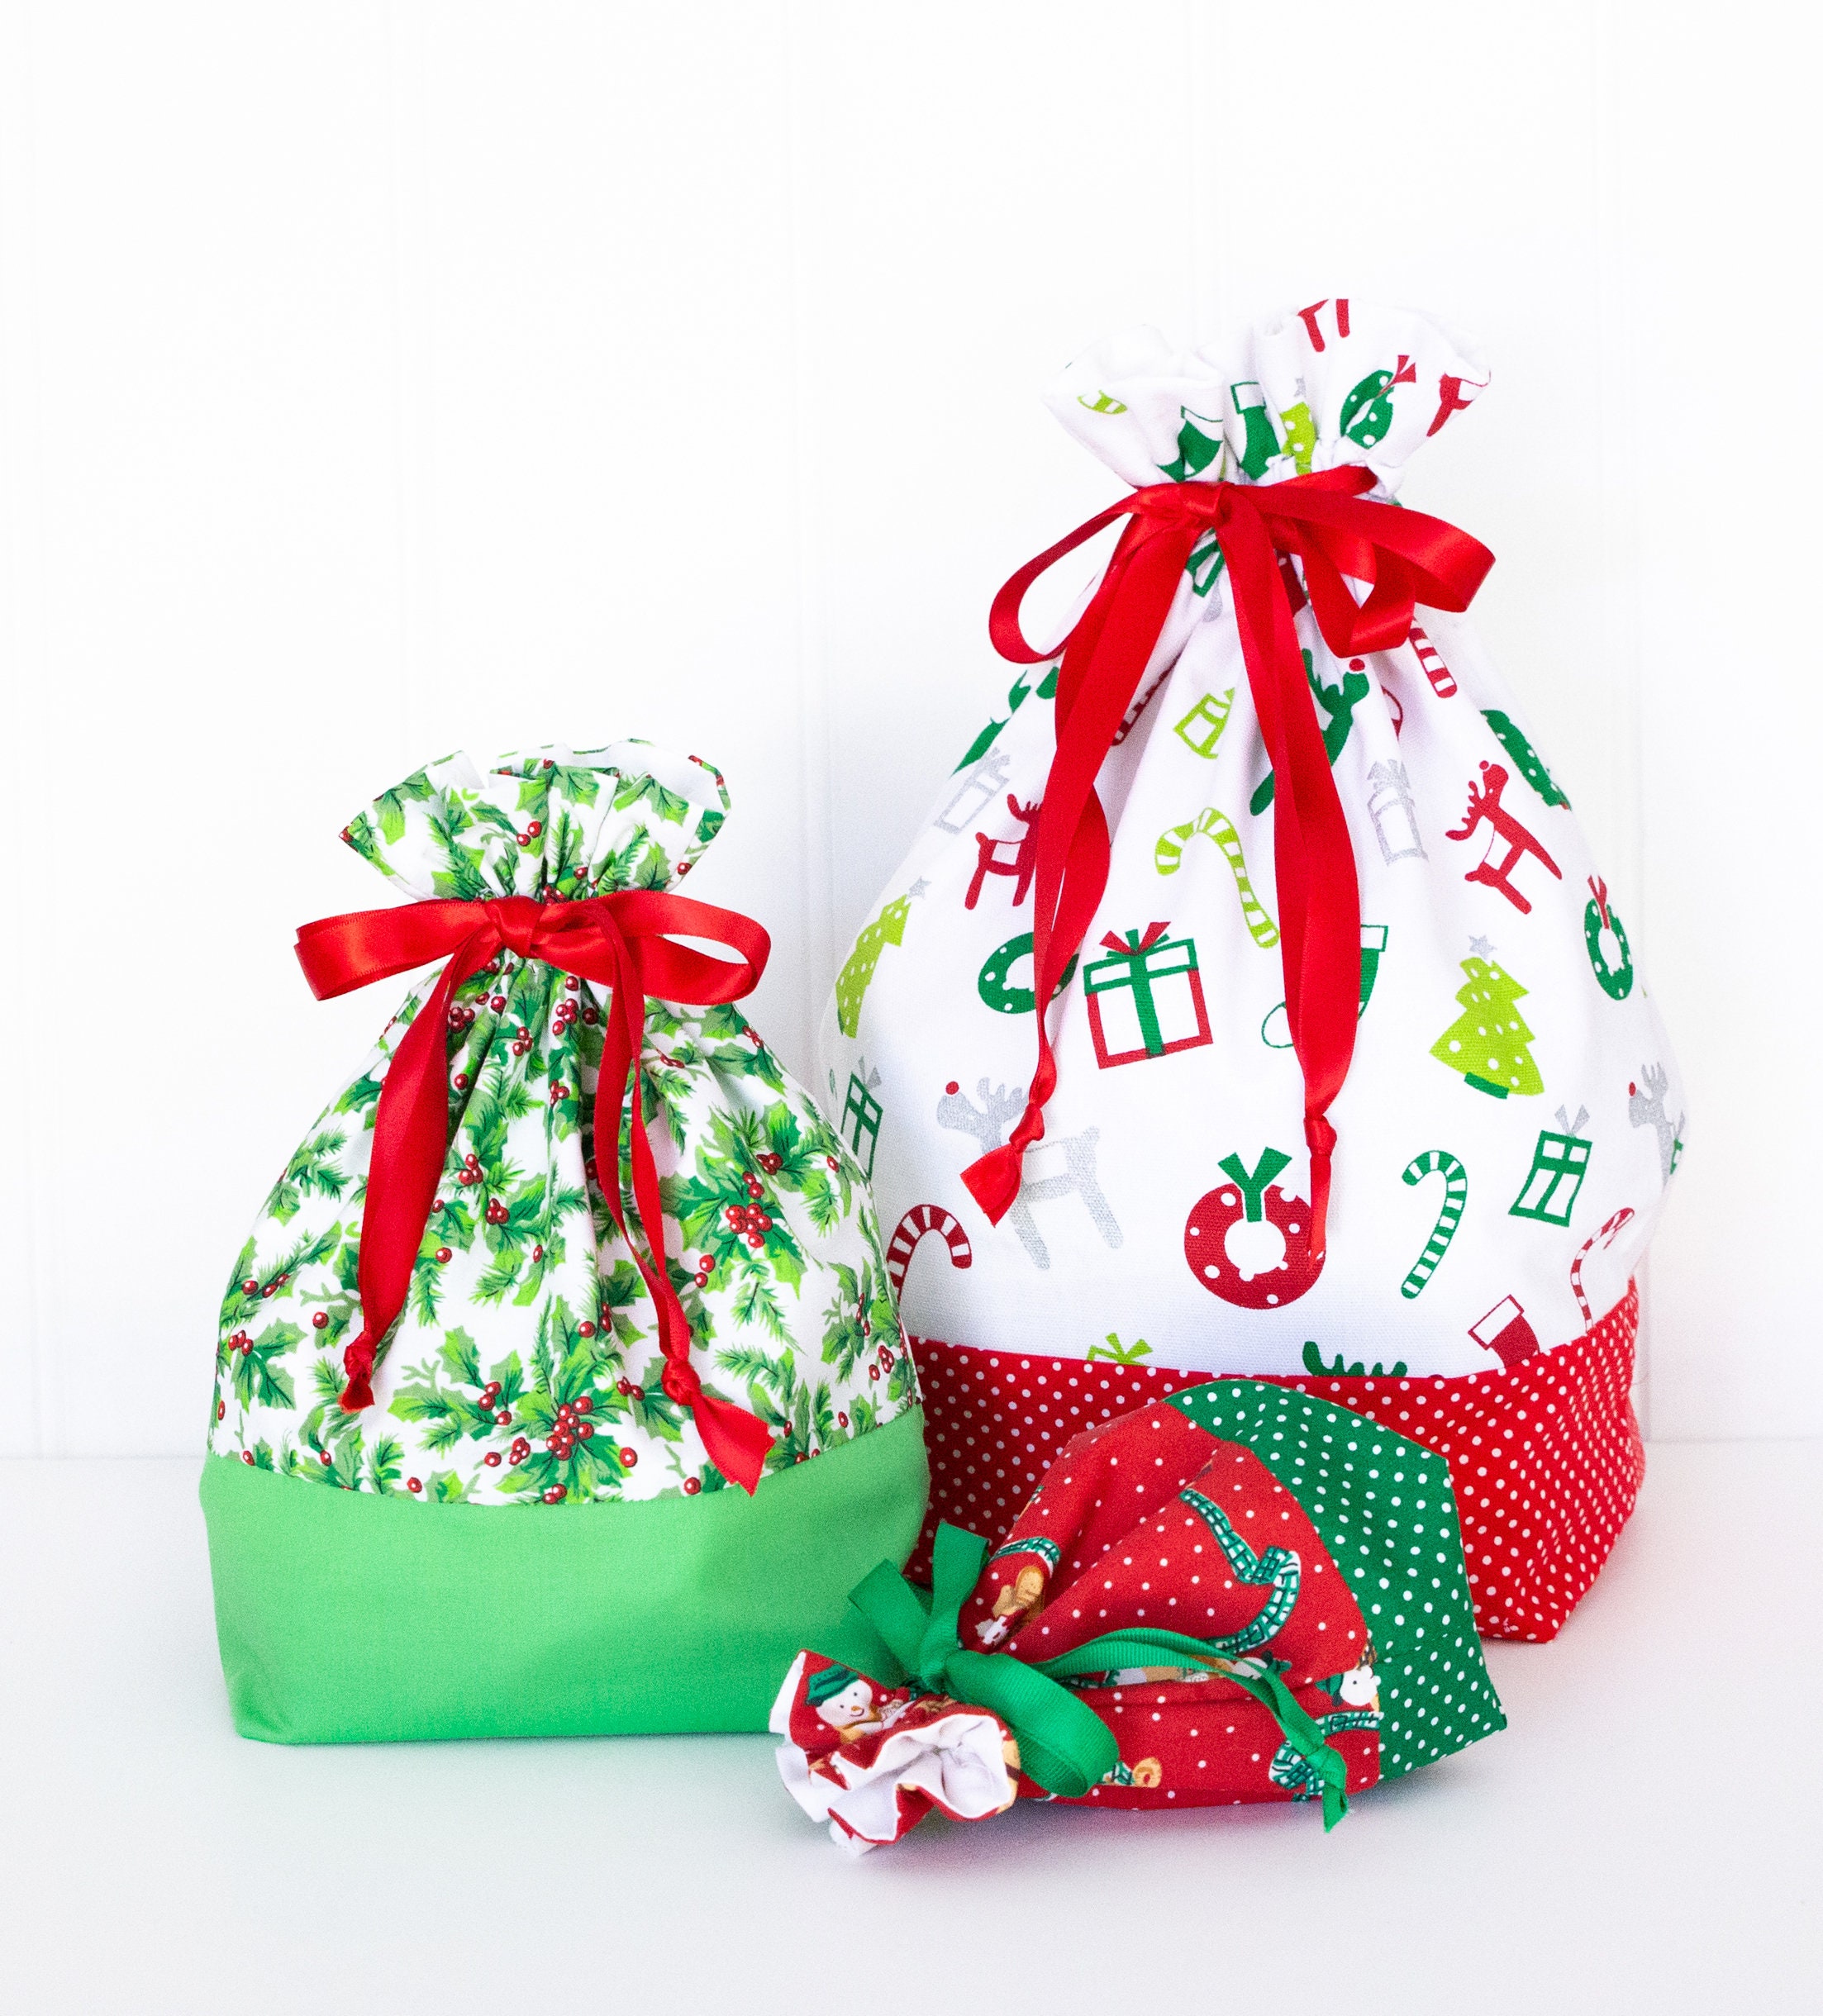 Reusable fabric gift bags (easy Christmas sewing) 